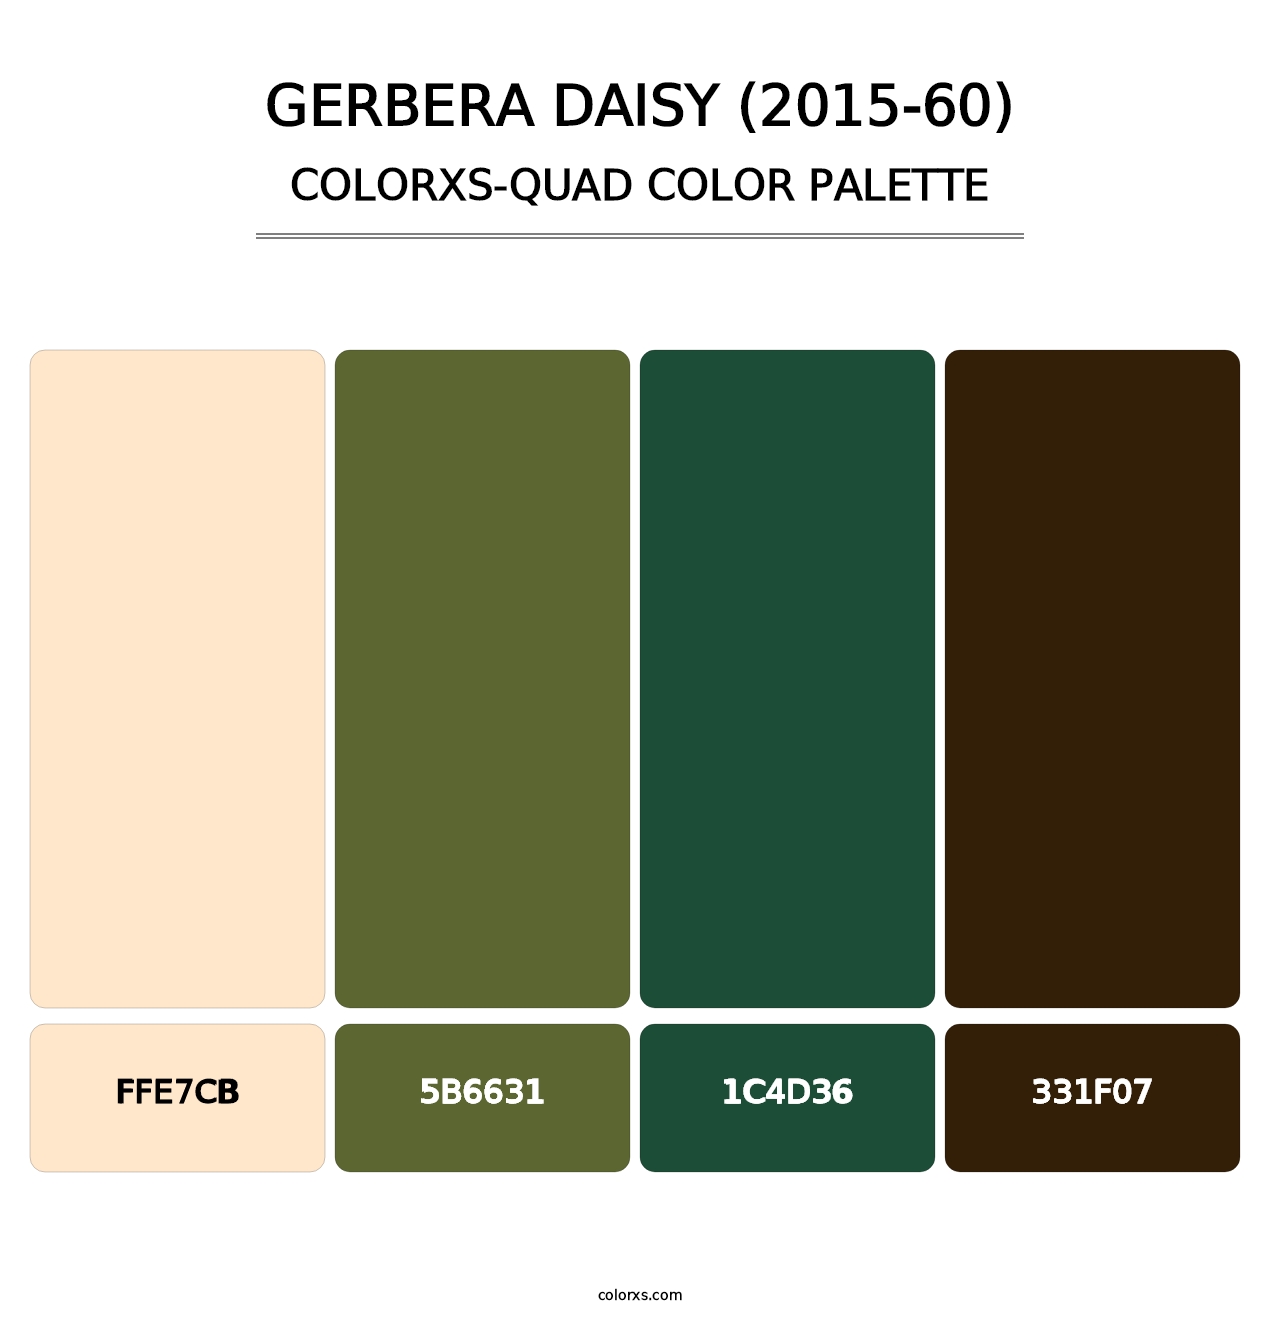 Gerbera Daisy (2015-60) - Colorxs Quad Palette